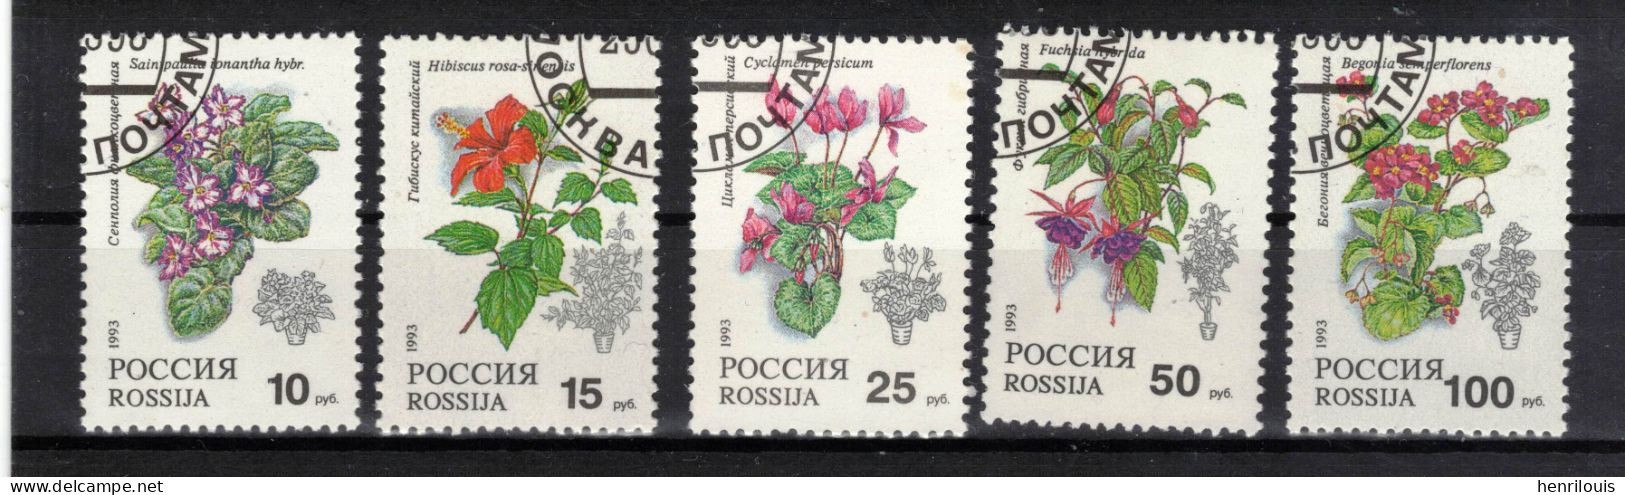 Russie   Timbres  De 1993  ( Ref 1332 H)  Flore - Fleurs - Usados